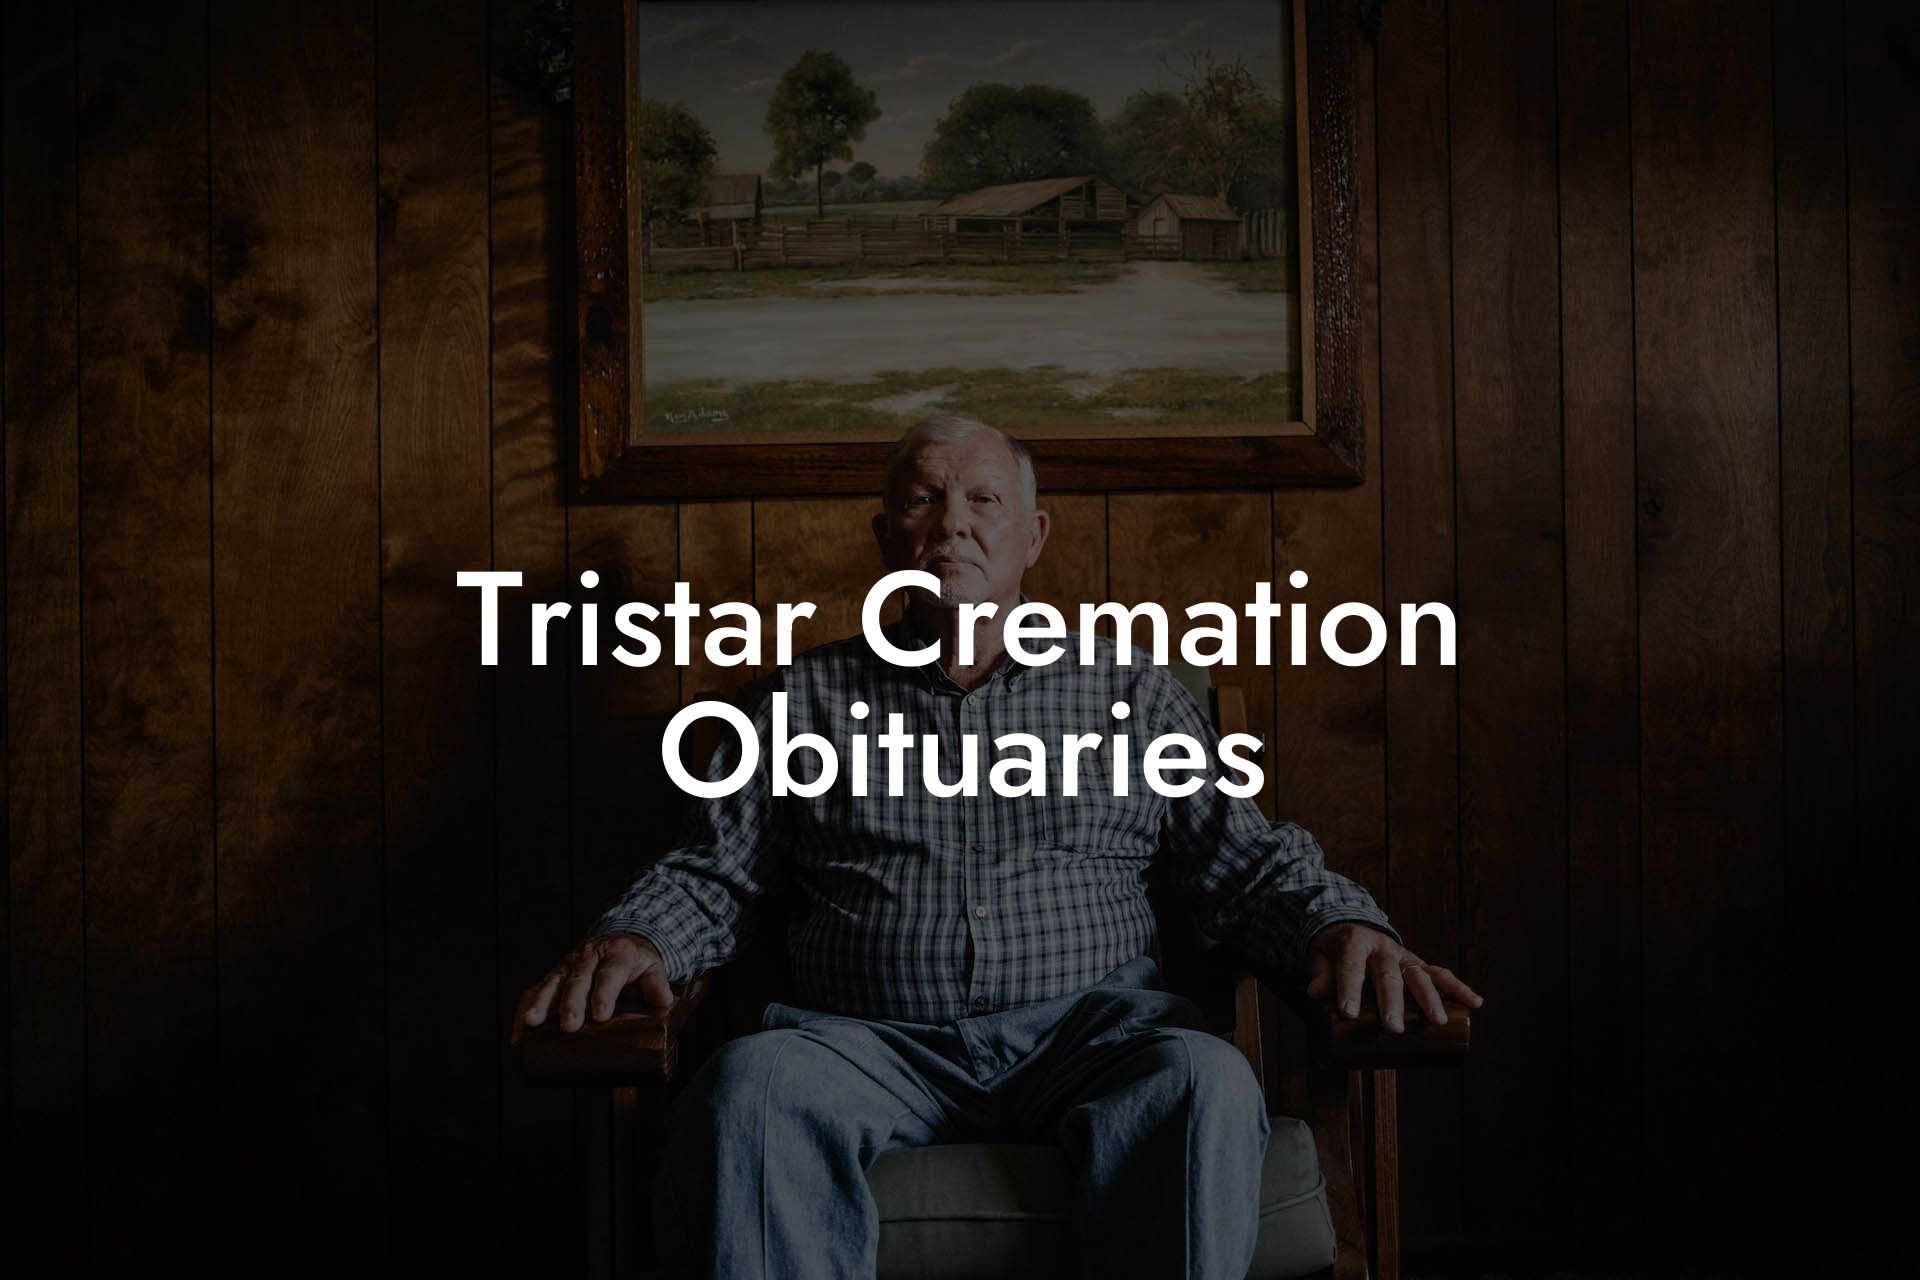 Tristar Cremation Obituaries